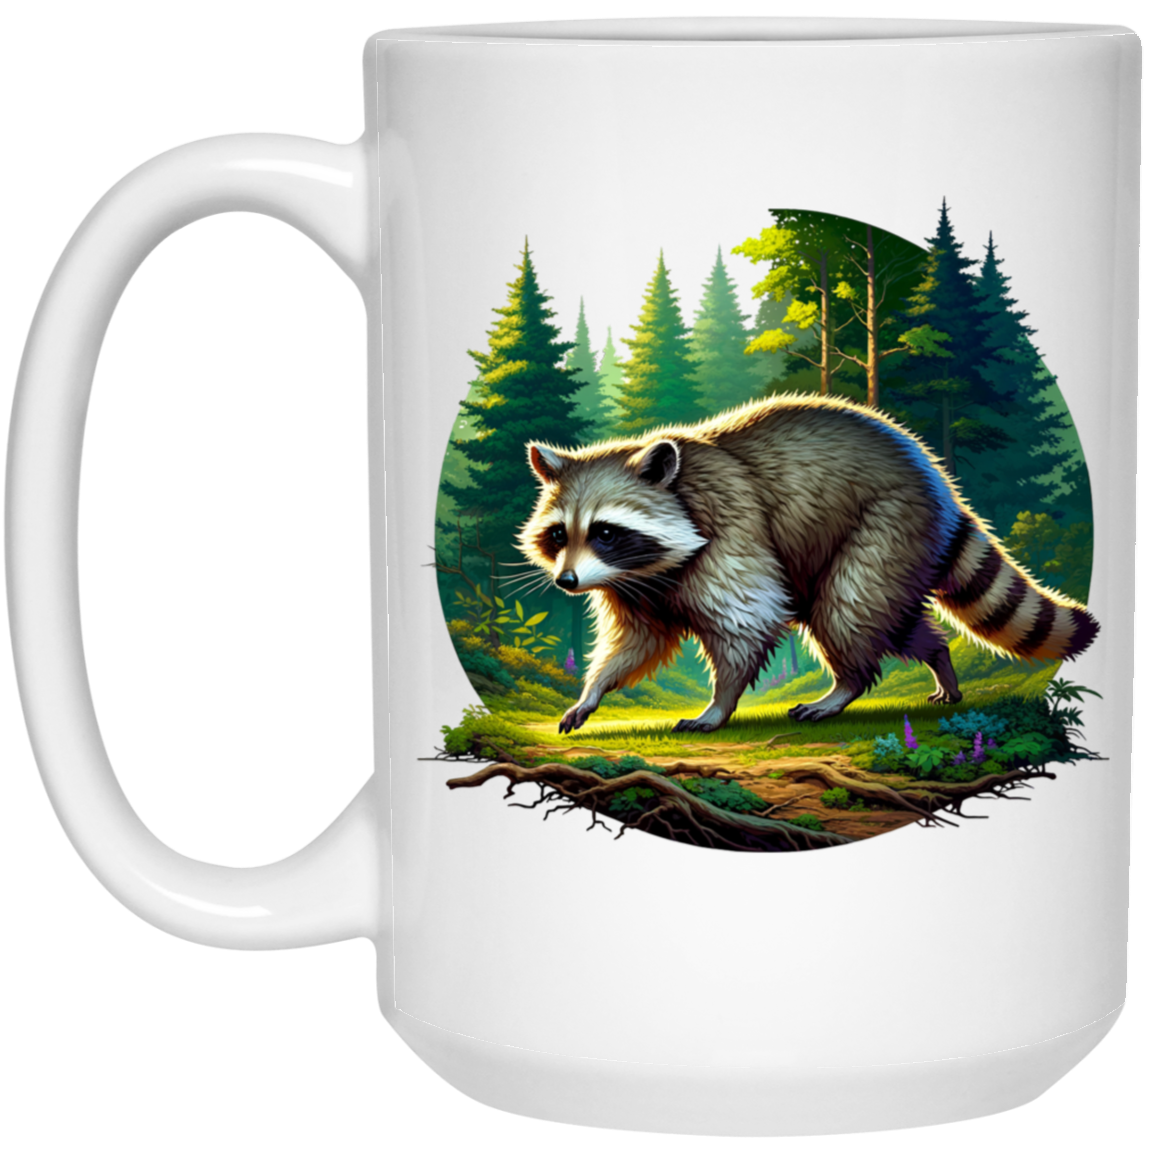 Walking Raccoon - Mugs